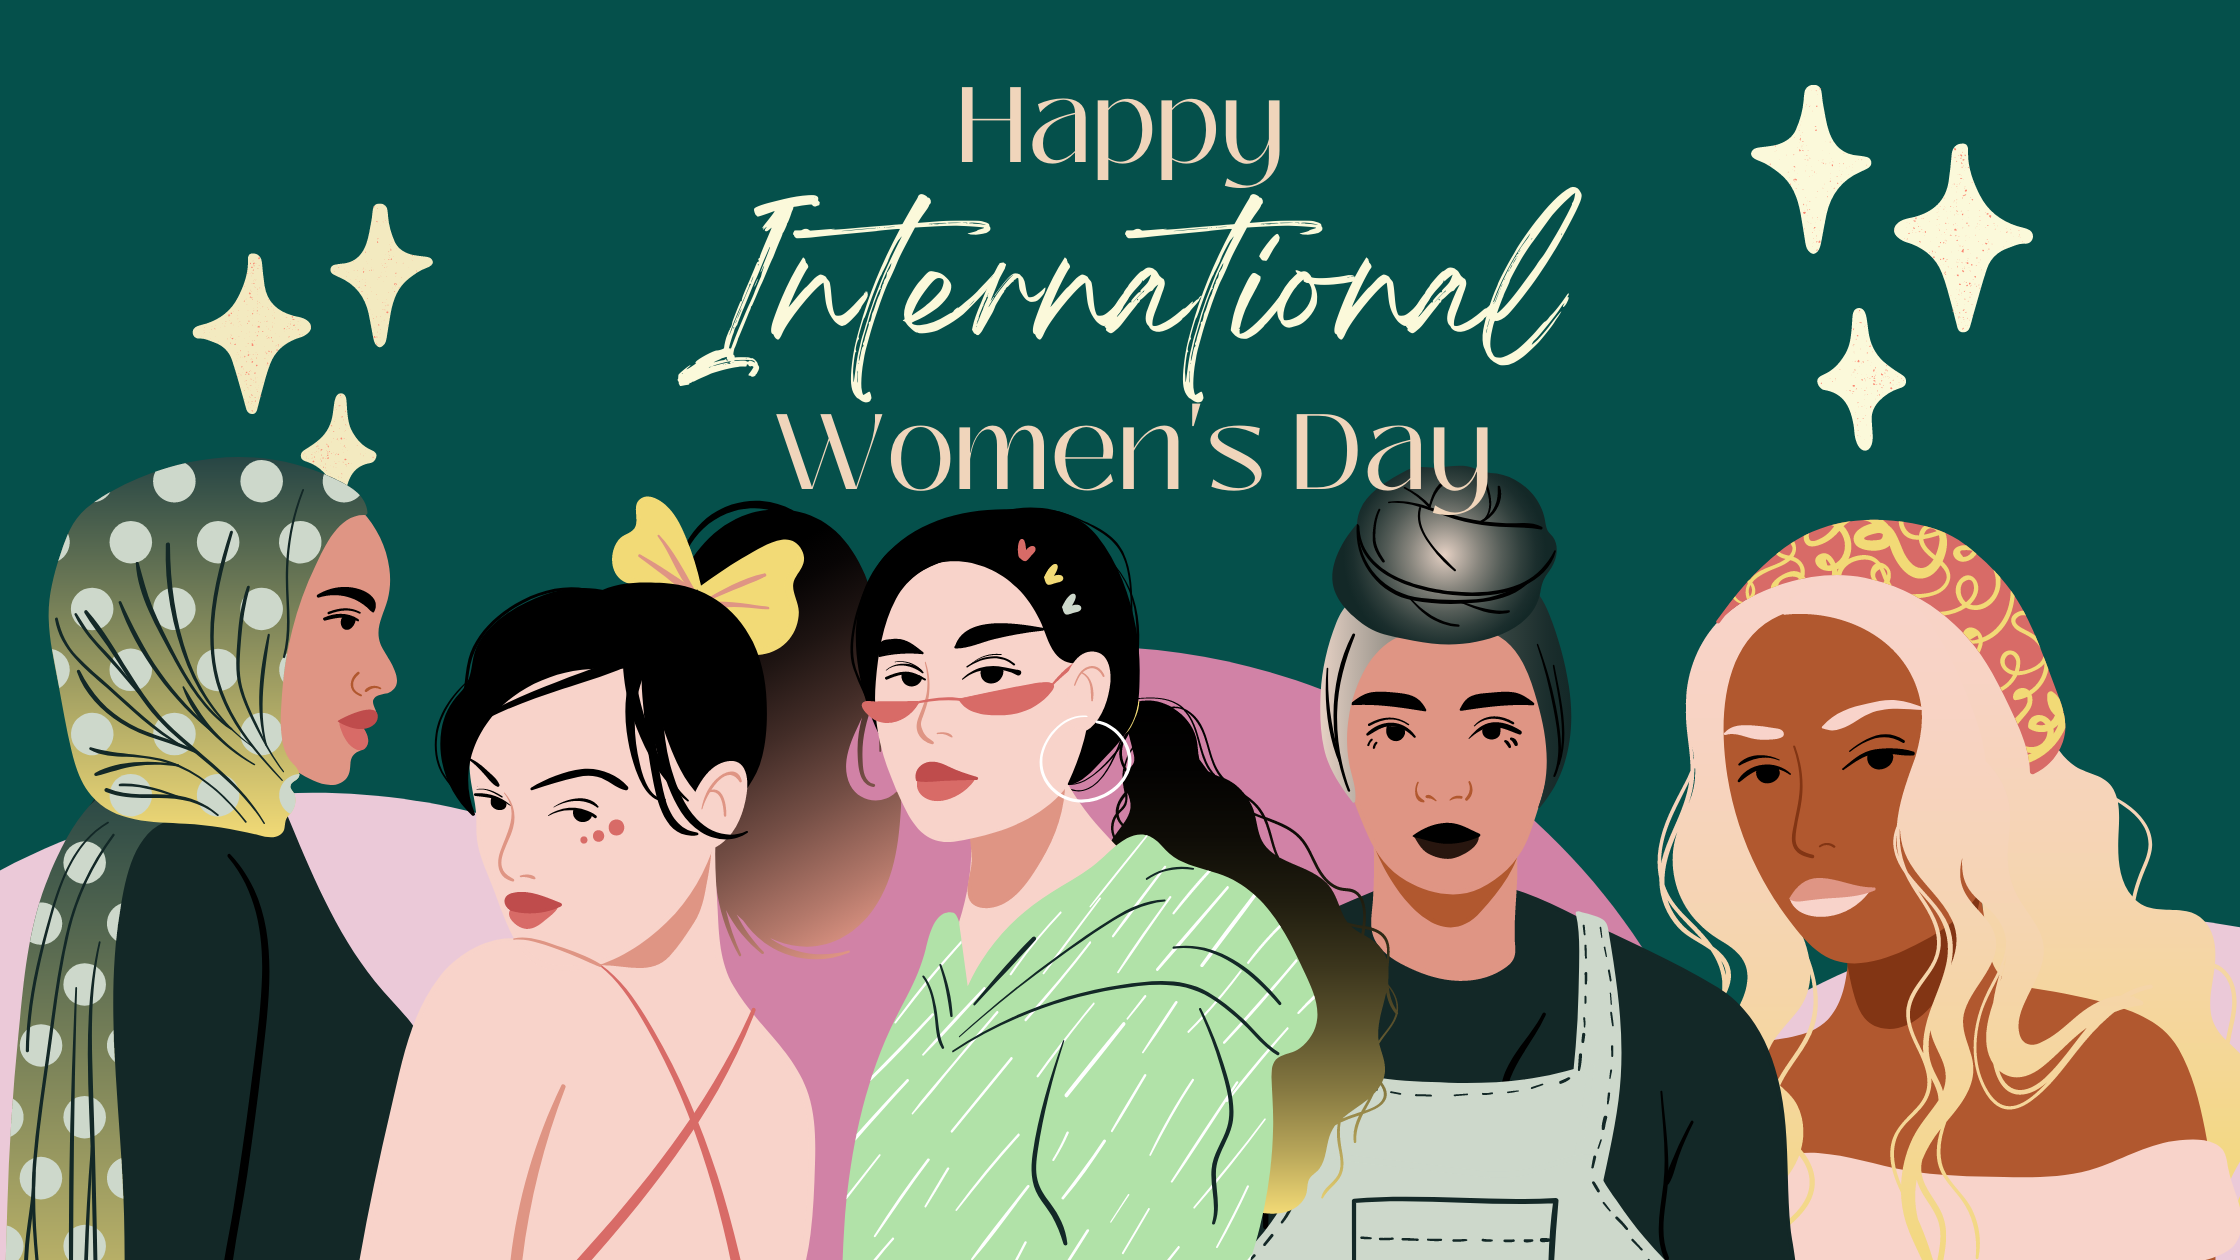 Happy International Women's Day